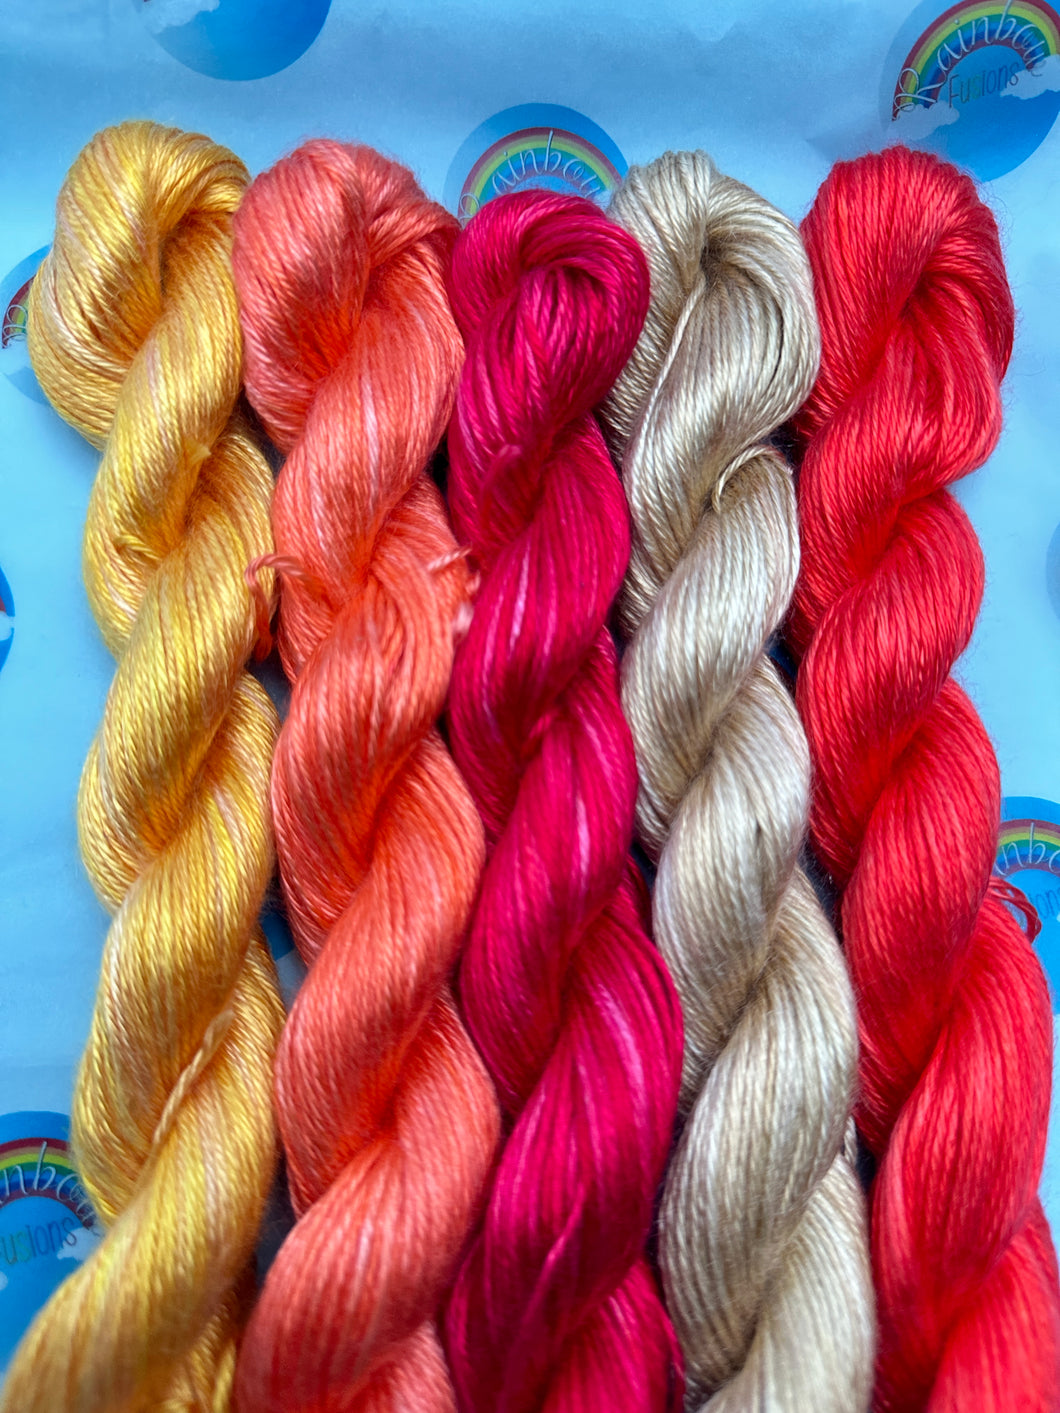 Warm Colours Bundle - Tencel - Natural Plant Fibre Hand Dyed Yarn